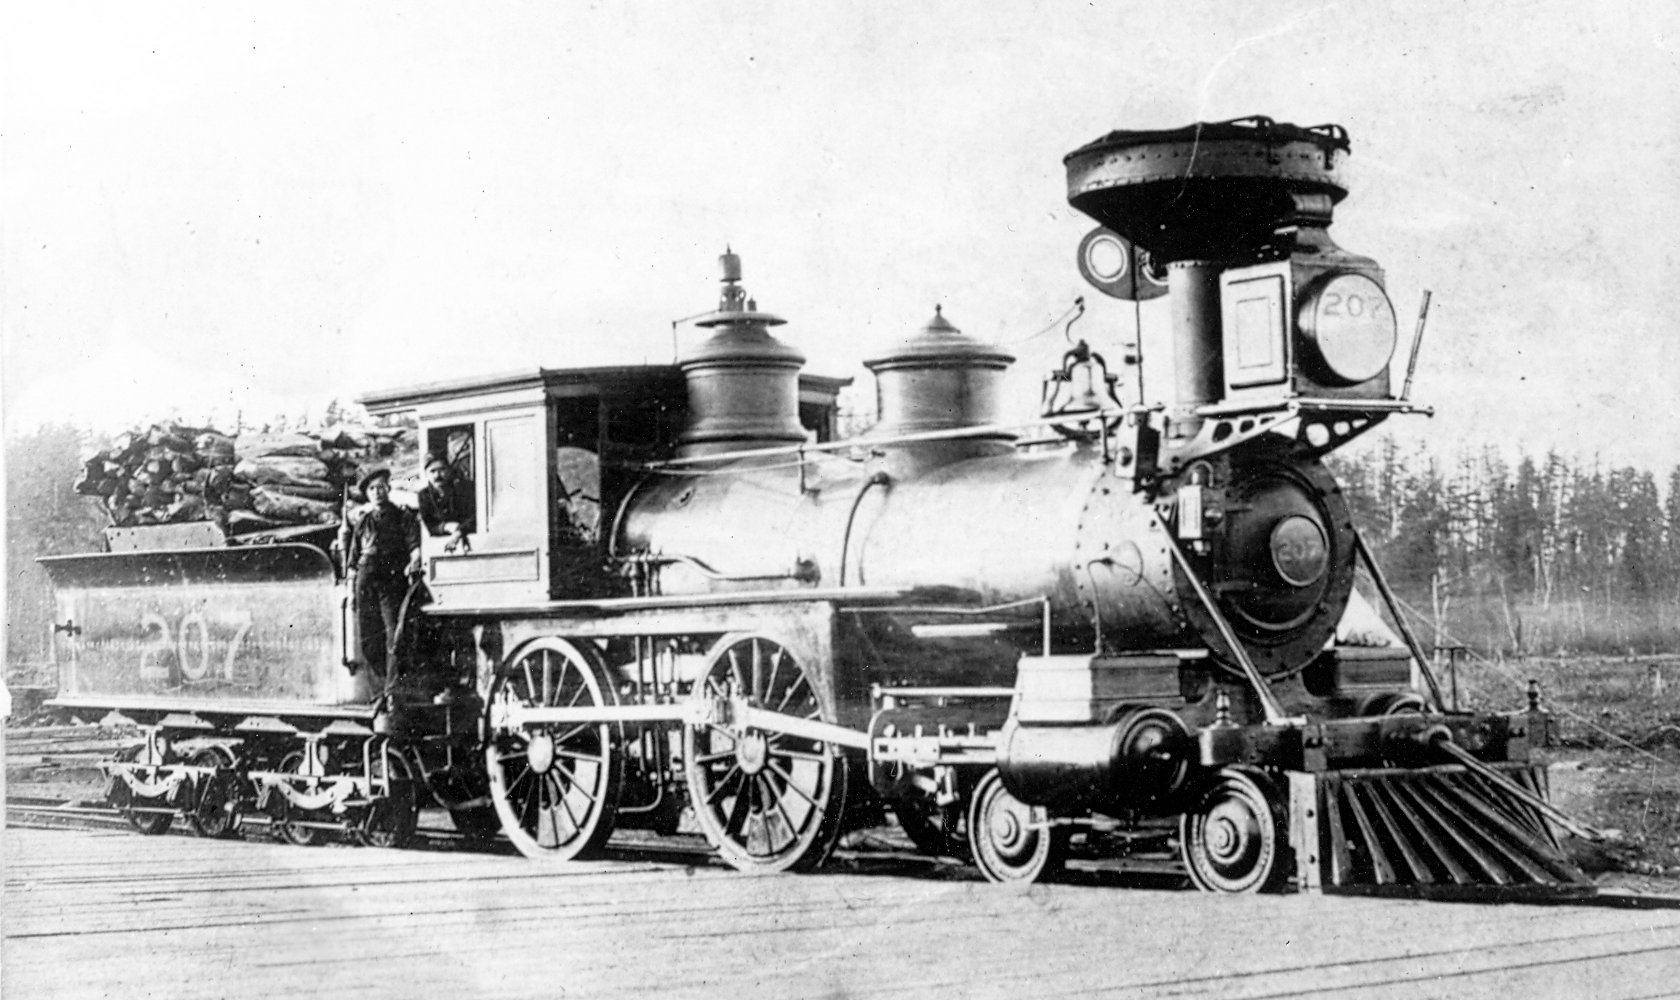 locomotive-wood-burning-no-207-1870s1.jp